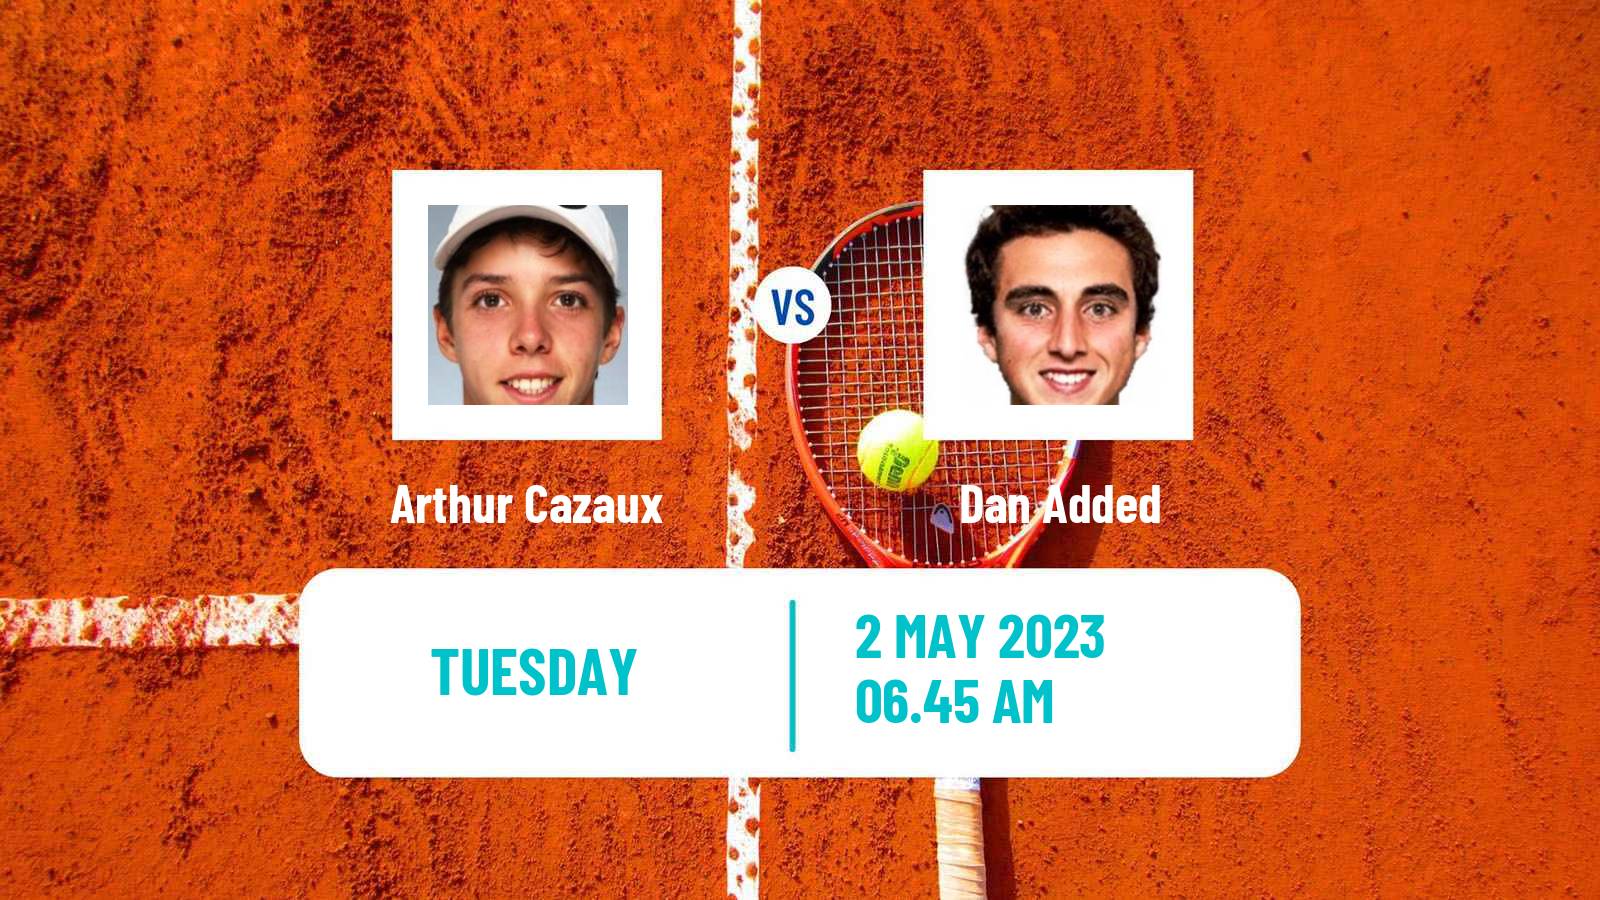 Tennis ATP Challenger Arthur Cazaux - Dan Added